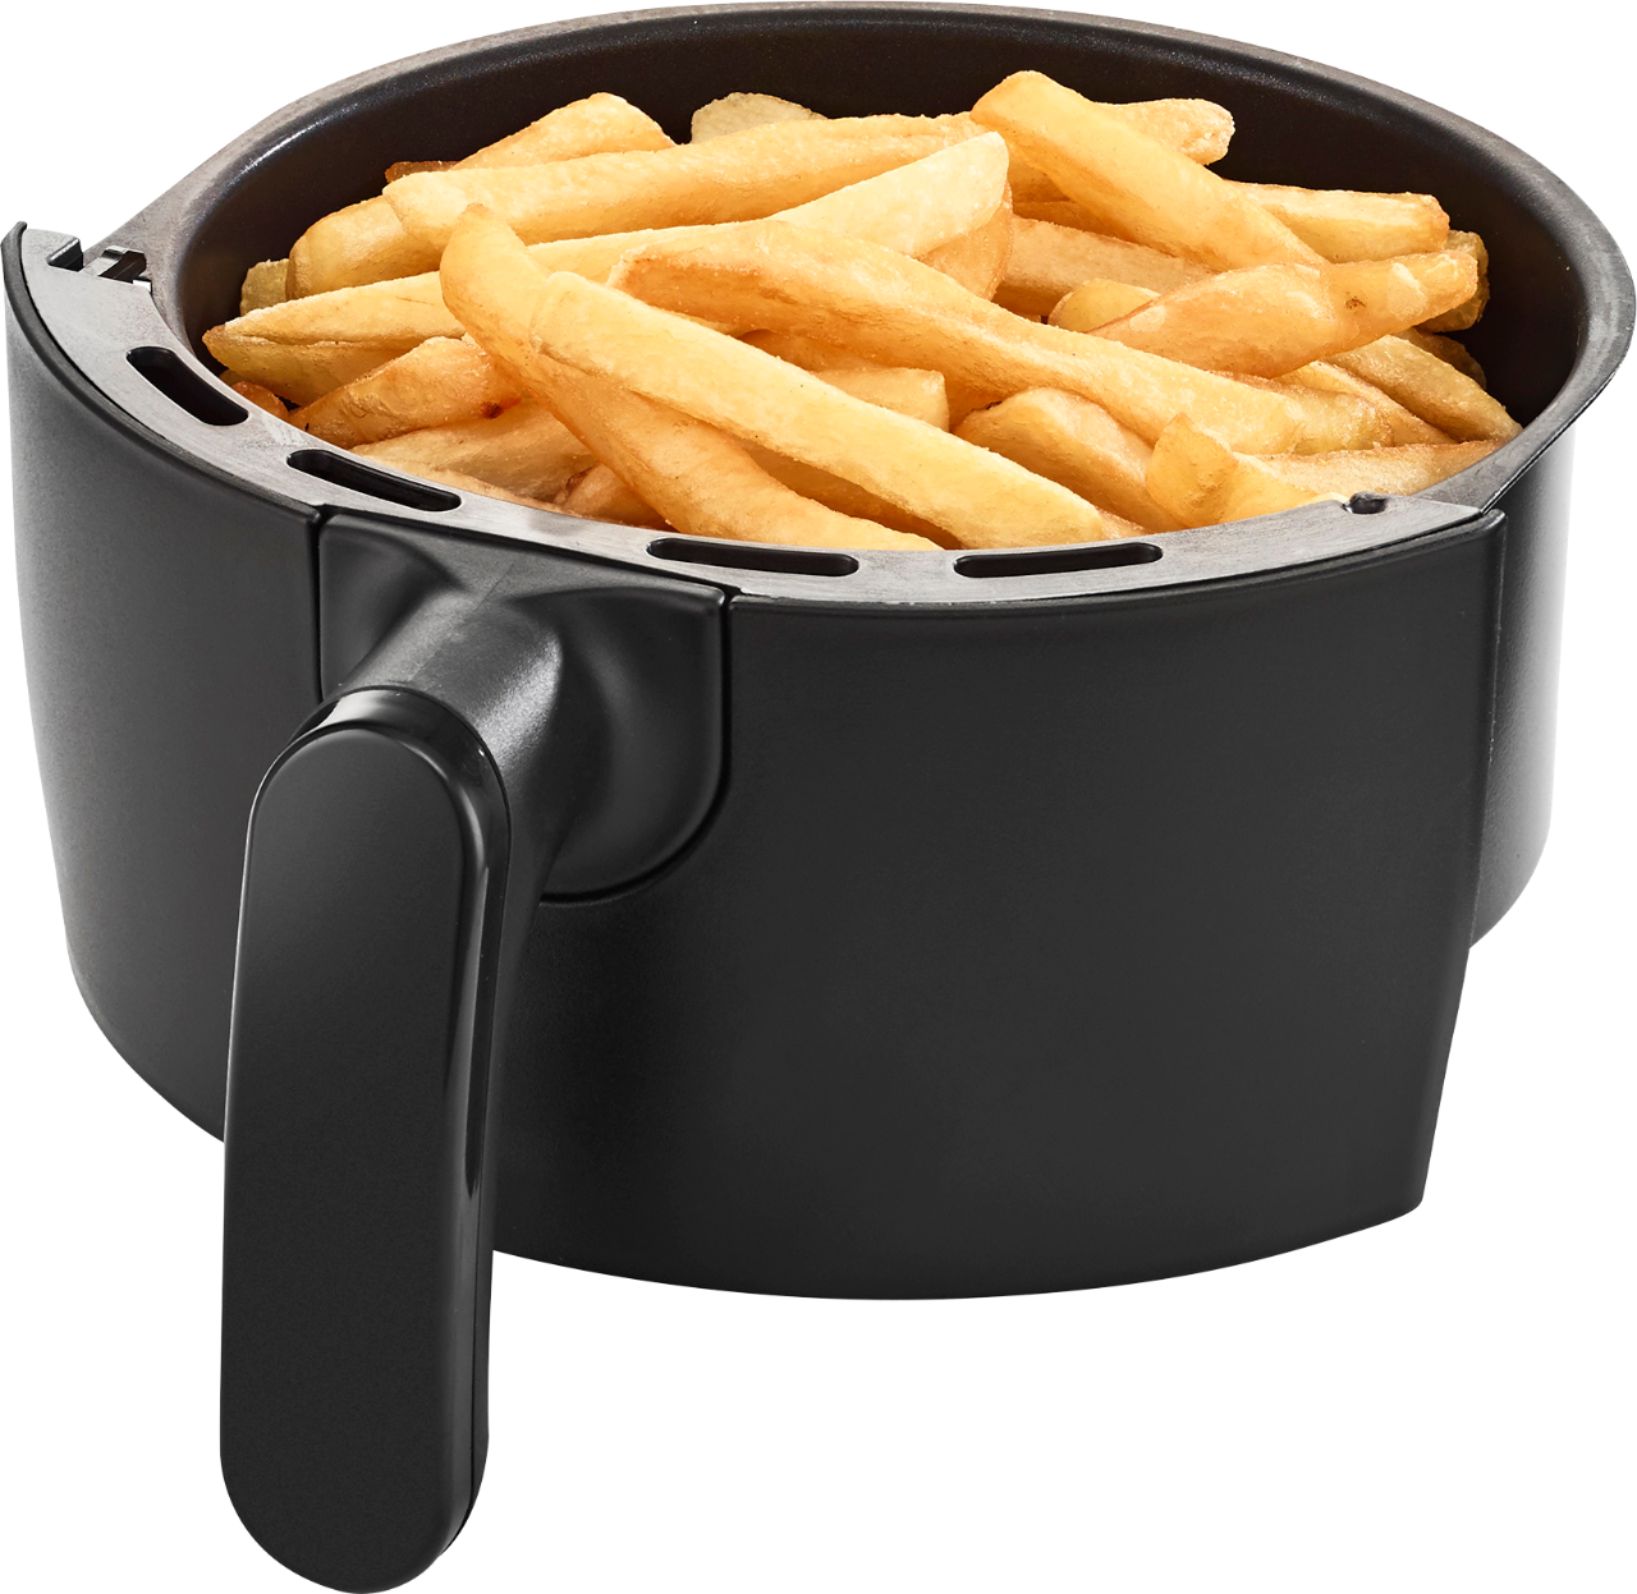 Black 2 Quart Air Fryer from Bella - appliances - by owner - sale -  craigslist